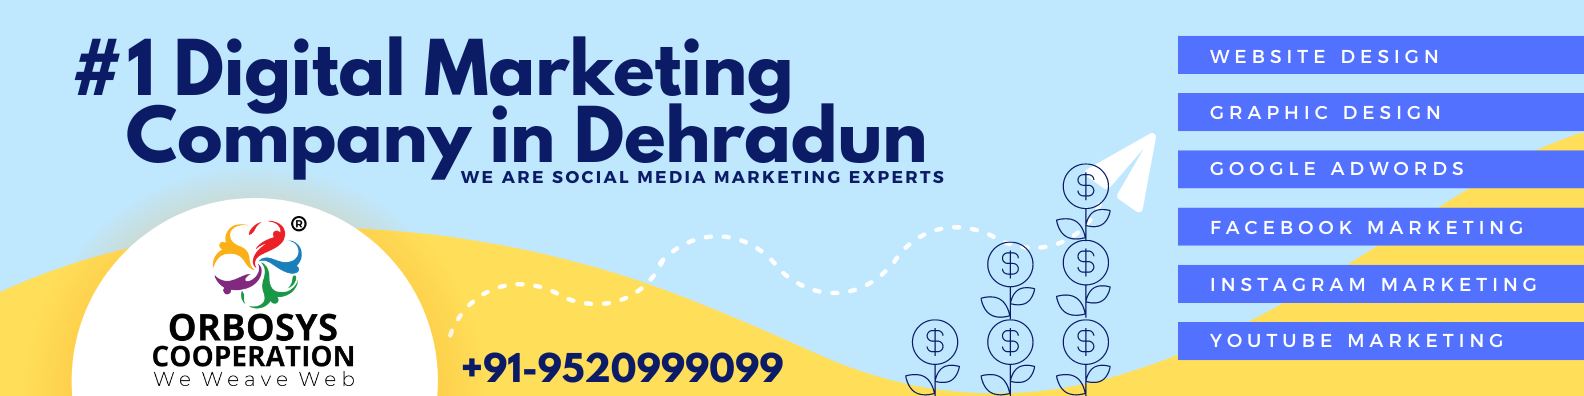 Orbosys Cooperation #1 Digital Marketing Company in Dehradun